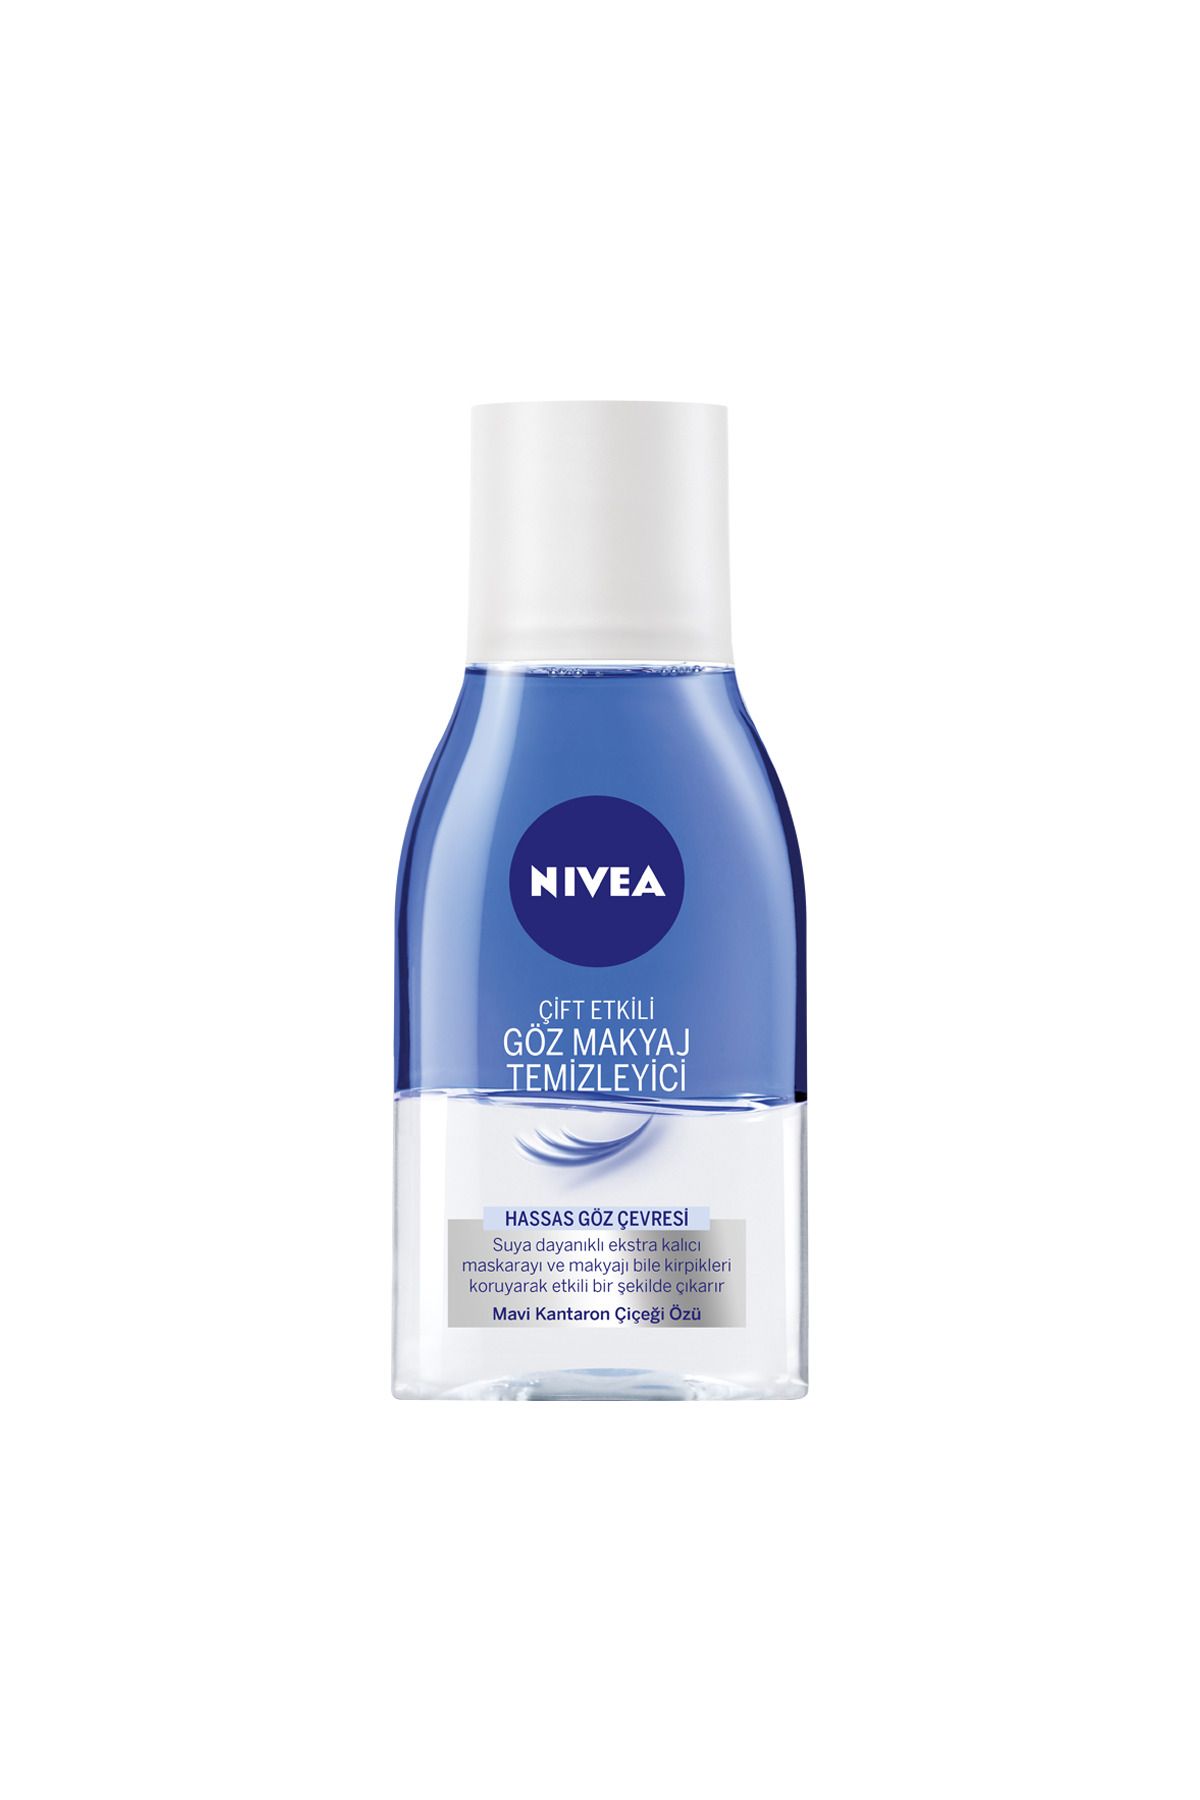 NIVEA Çift Etkili Göz Makyaj Temizleme Losyonu 125 ml